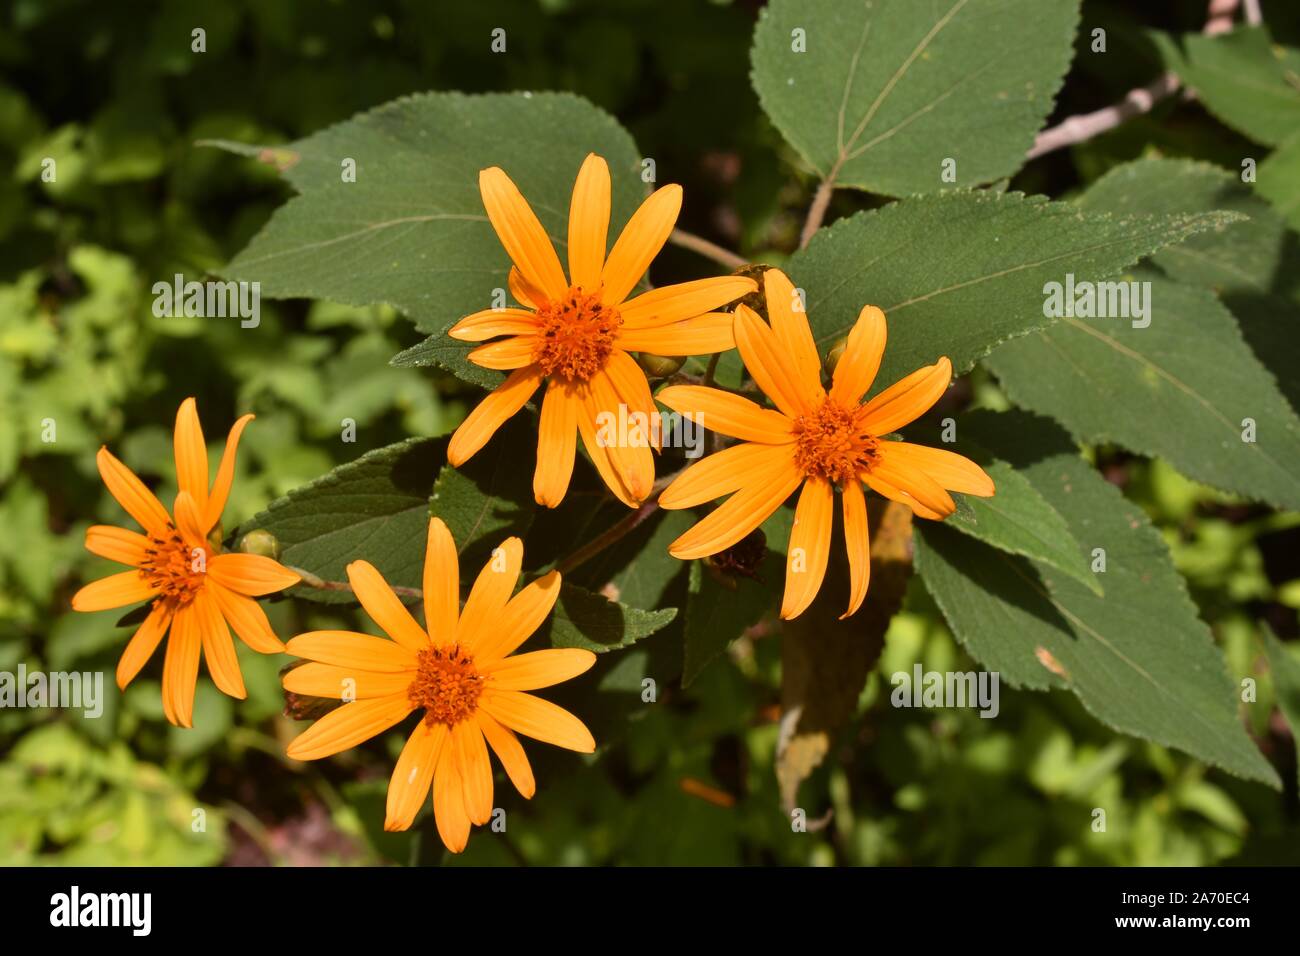 Four Flowers, yellow daisy. Stock Photo